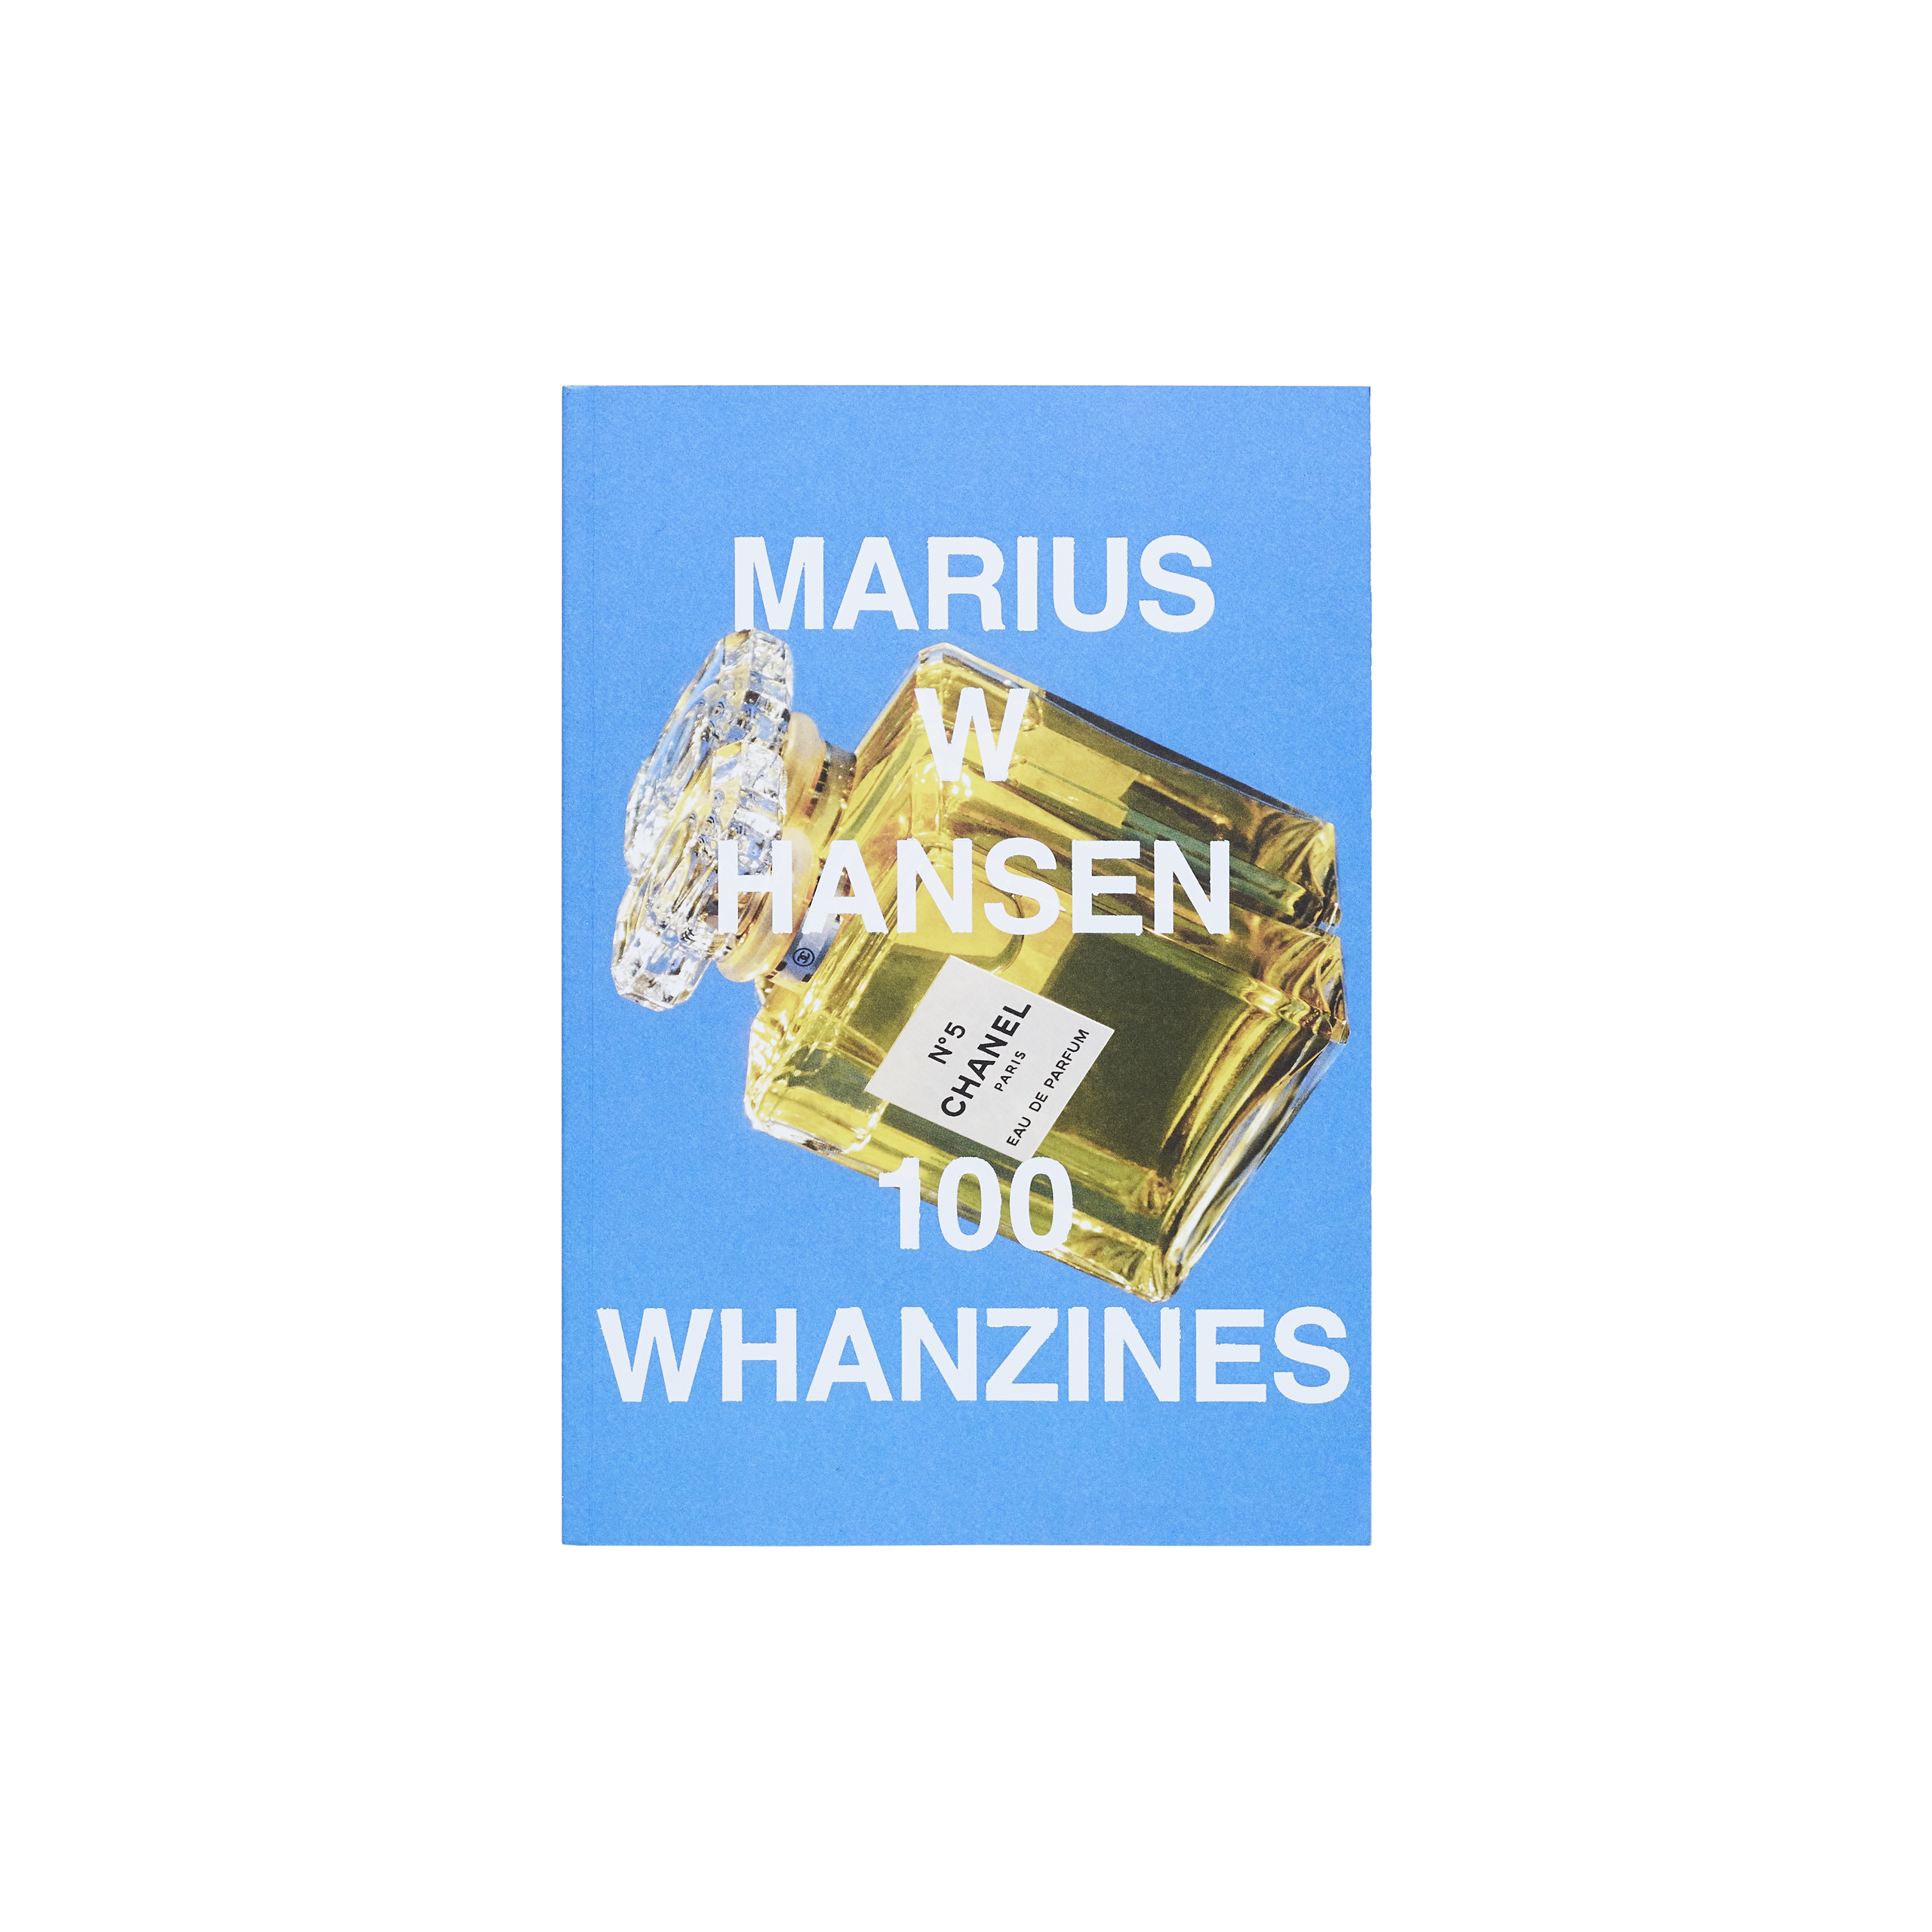 100 WHANZINES By Marius W Hansen